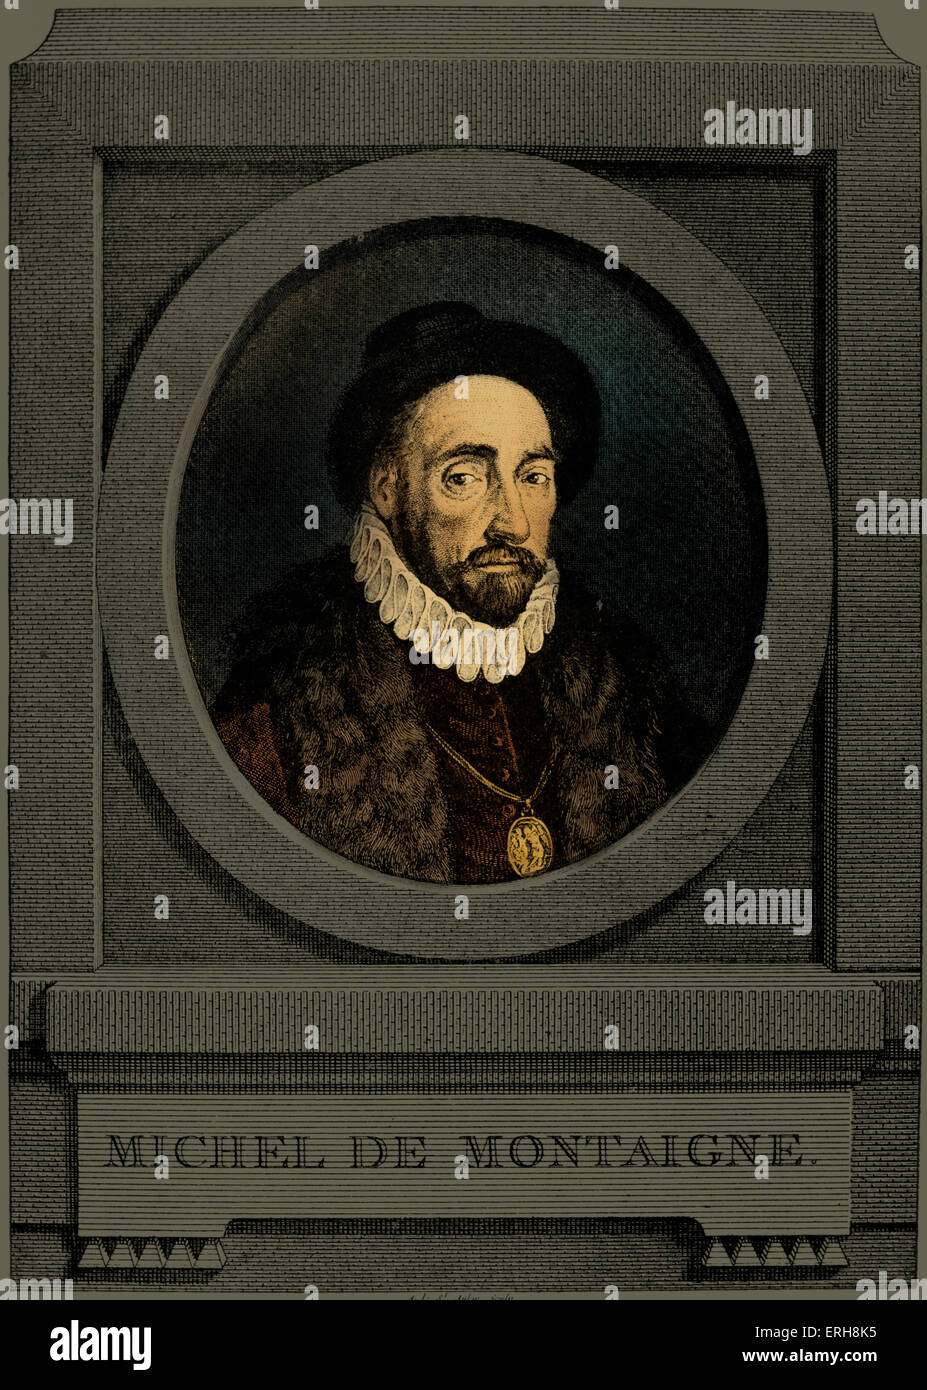 Michel de Montaigne - portrait of the French writer, 28 February 1533 - 13 September 1592. Engraving by Charles Germain de Saint Aubin. Portrait in medallion, frontispiece of Montaigne's 'Voyage en Italie'. Stock Photo